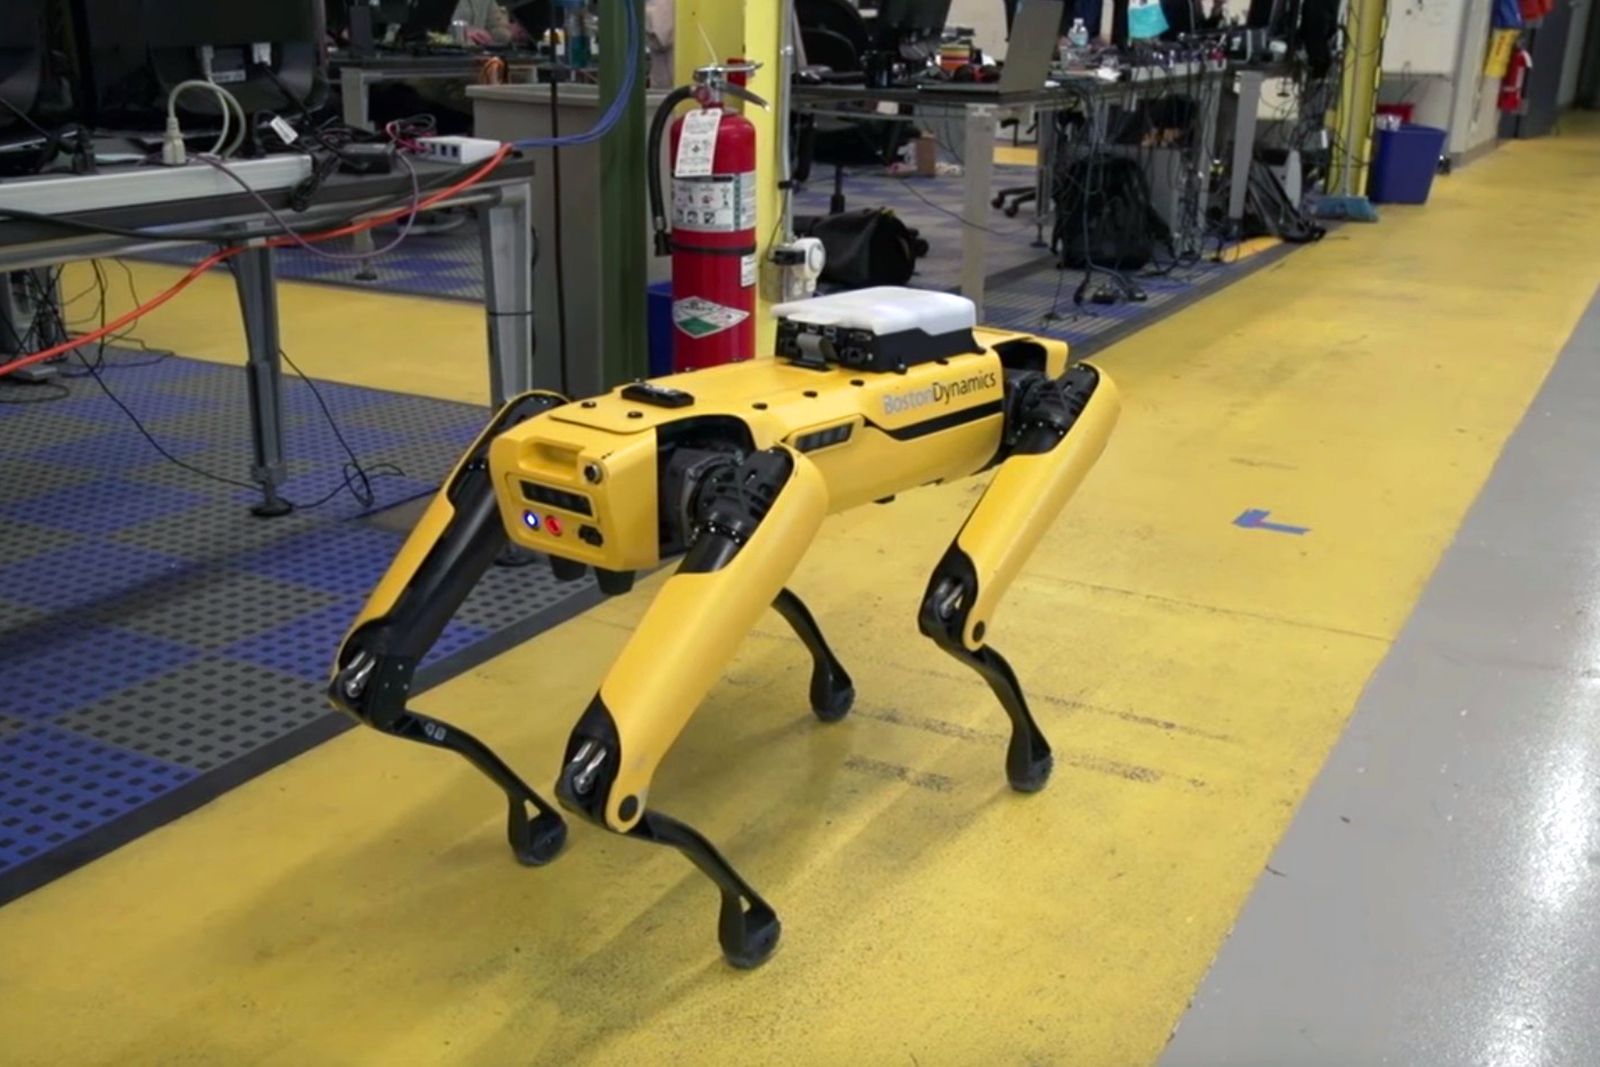 Want to buy SpotMini Boston Dynamics might sell its robot hellhound image 1